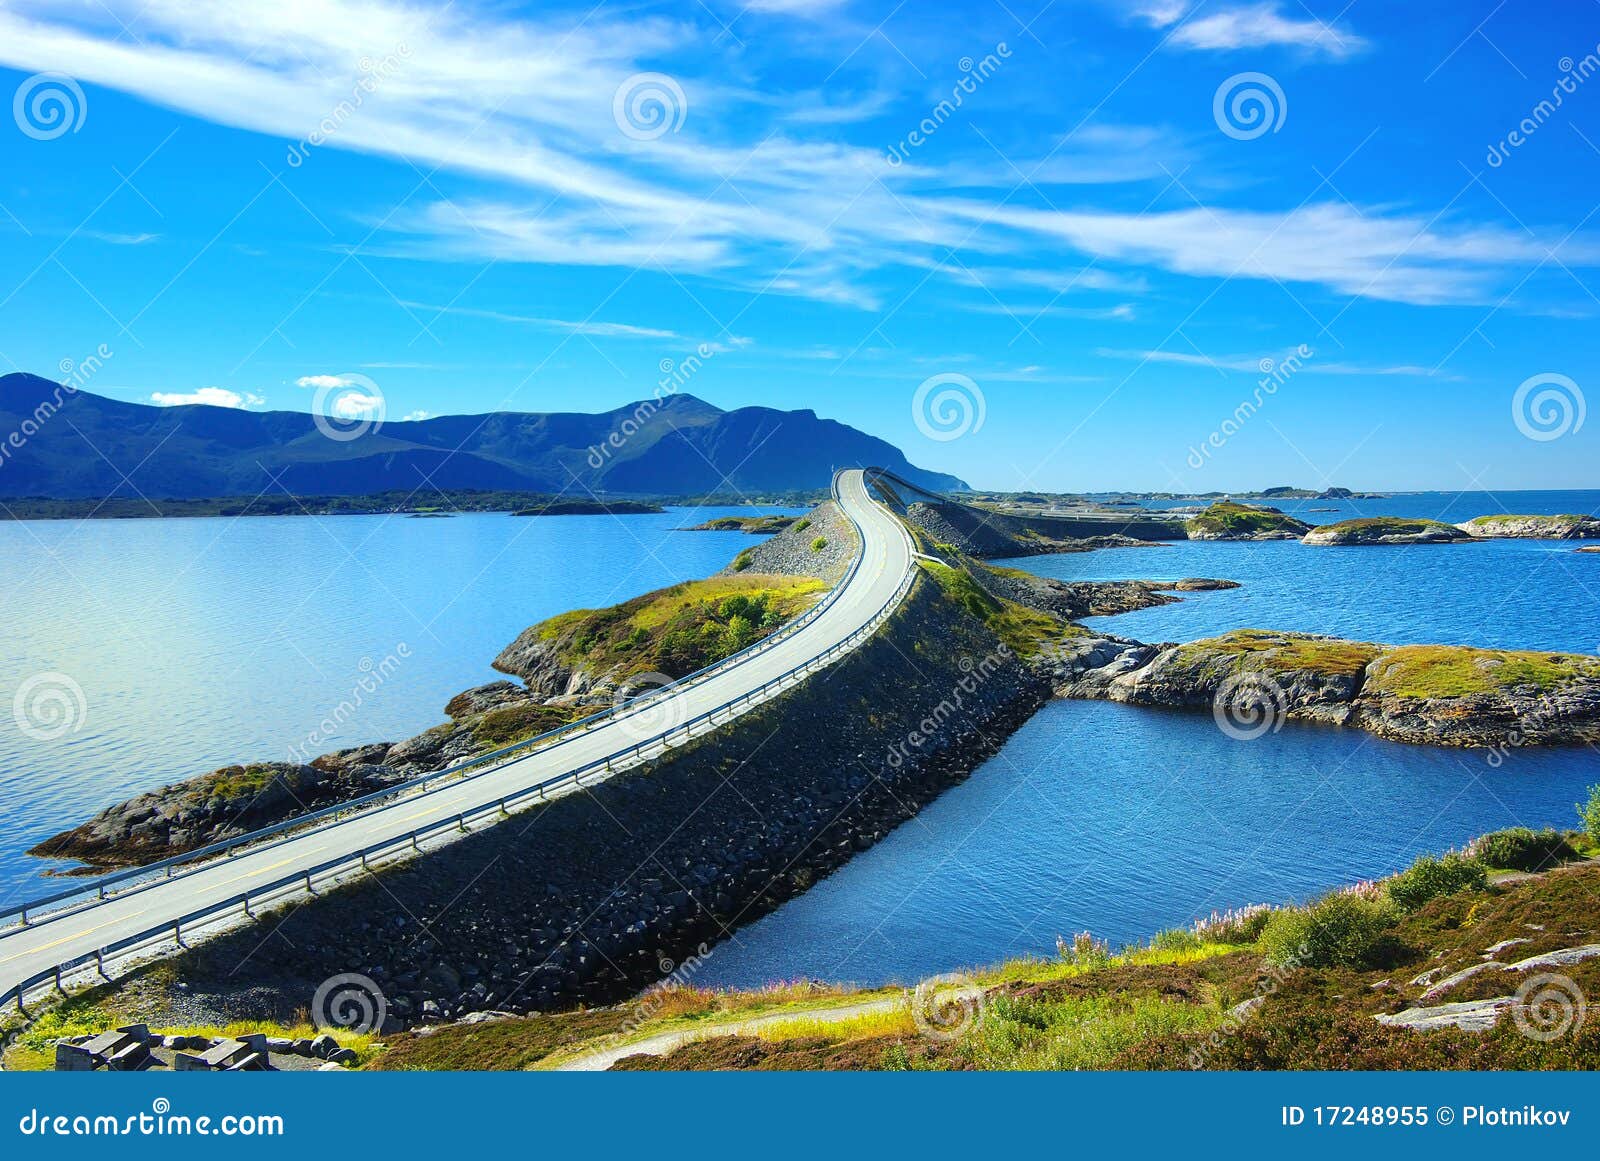 picturesque norway landscape. atlanterhavsvegen